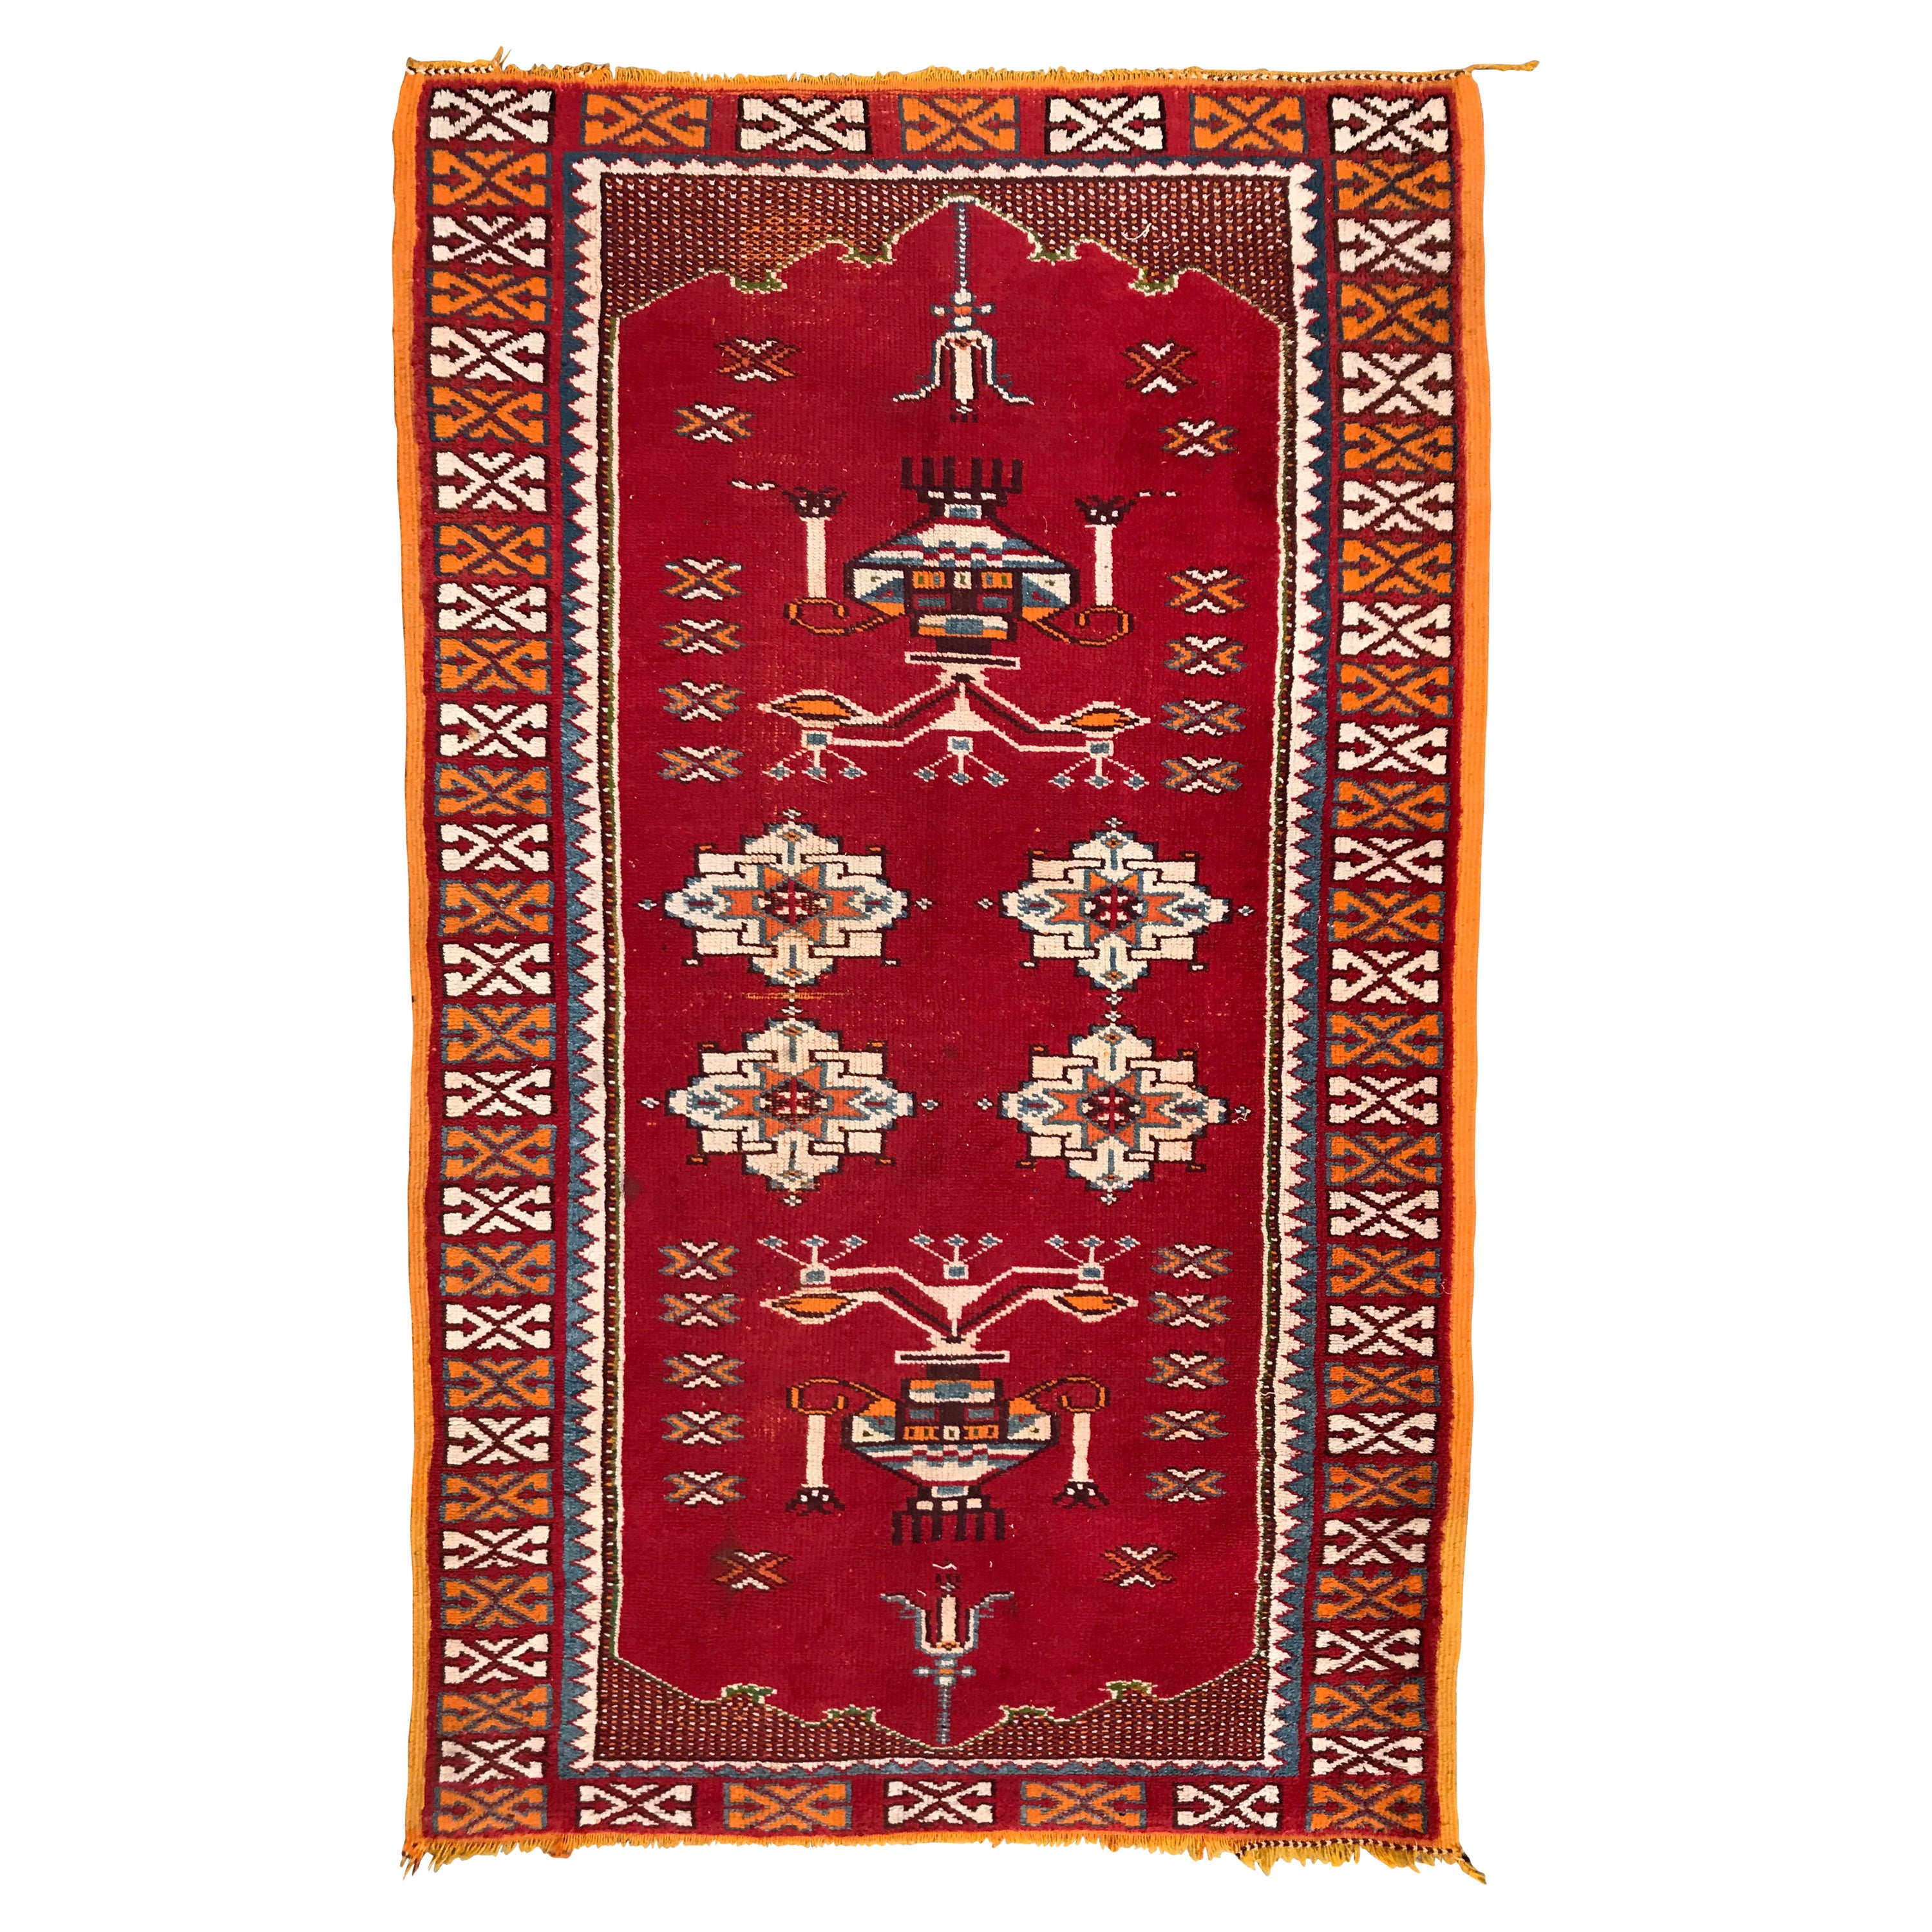 Bobyrug’s Pretty Vintage Moroccan Tribal Rug For Sale